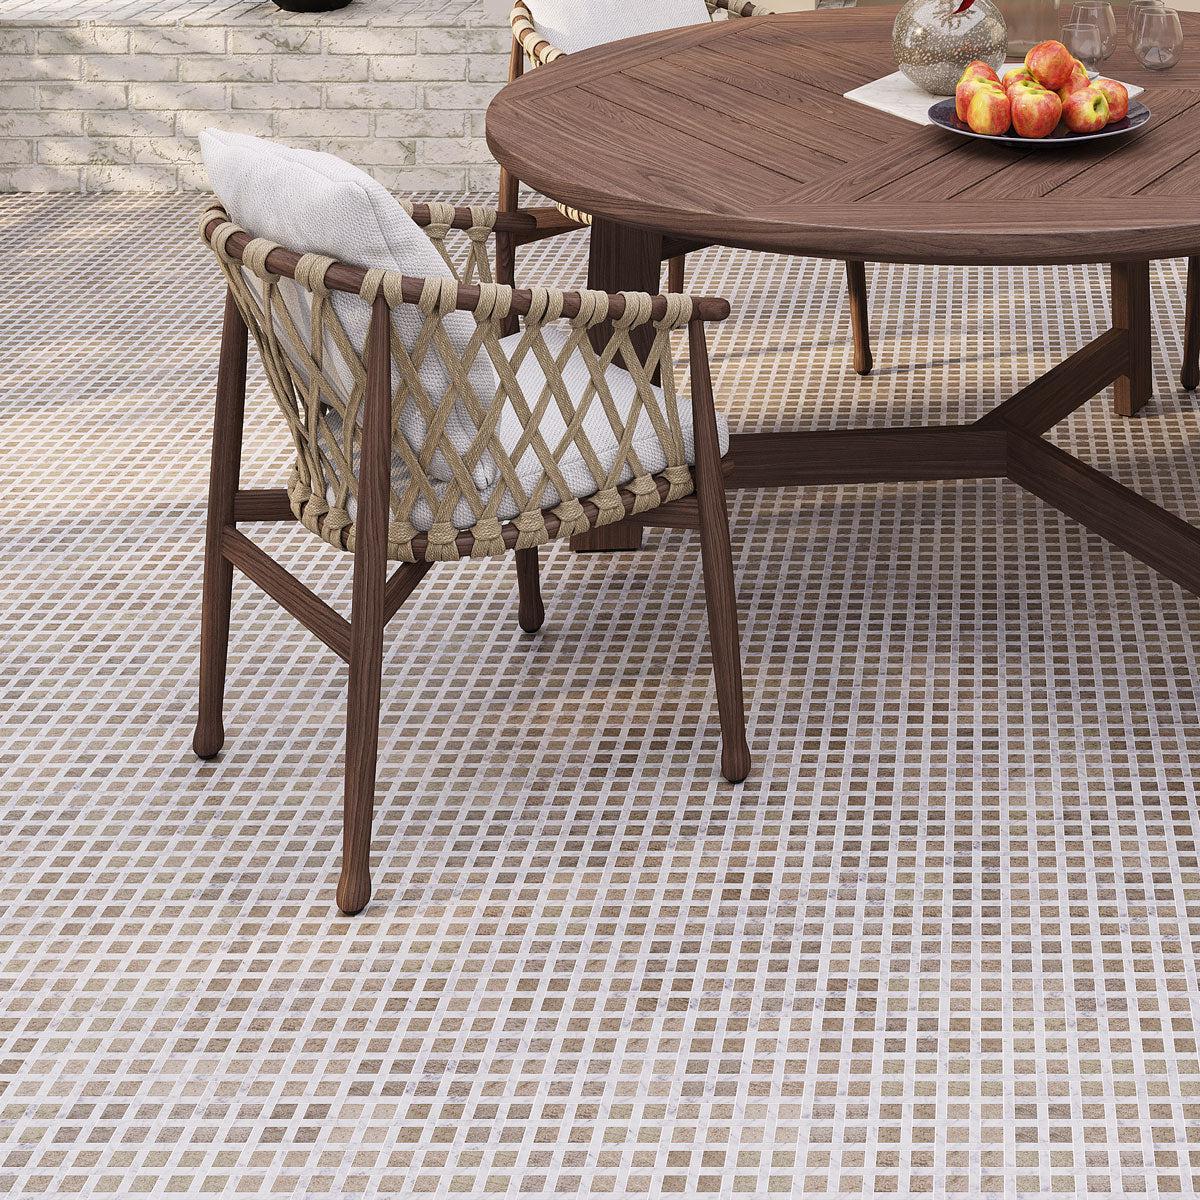 Boulevard Carrara And Beige Marble Mosaic Tile patio floor